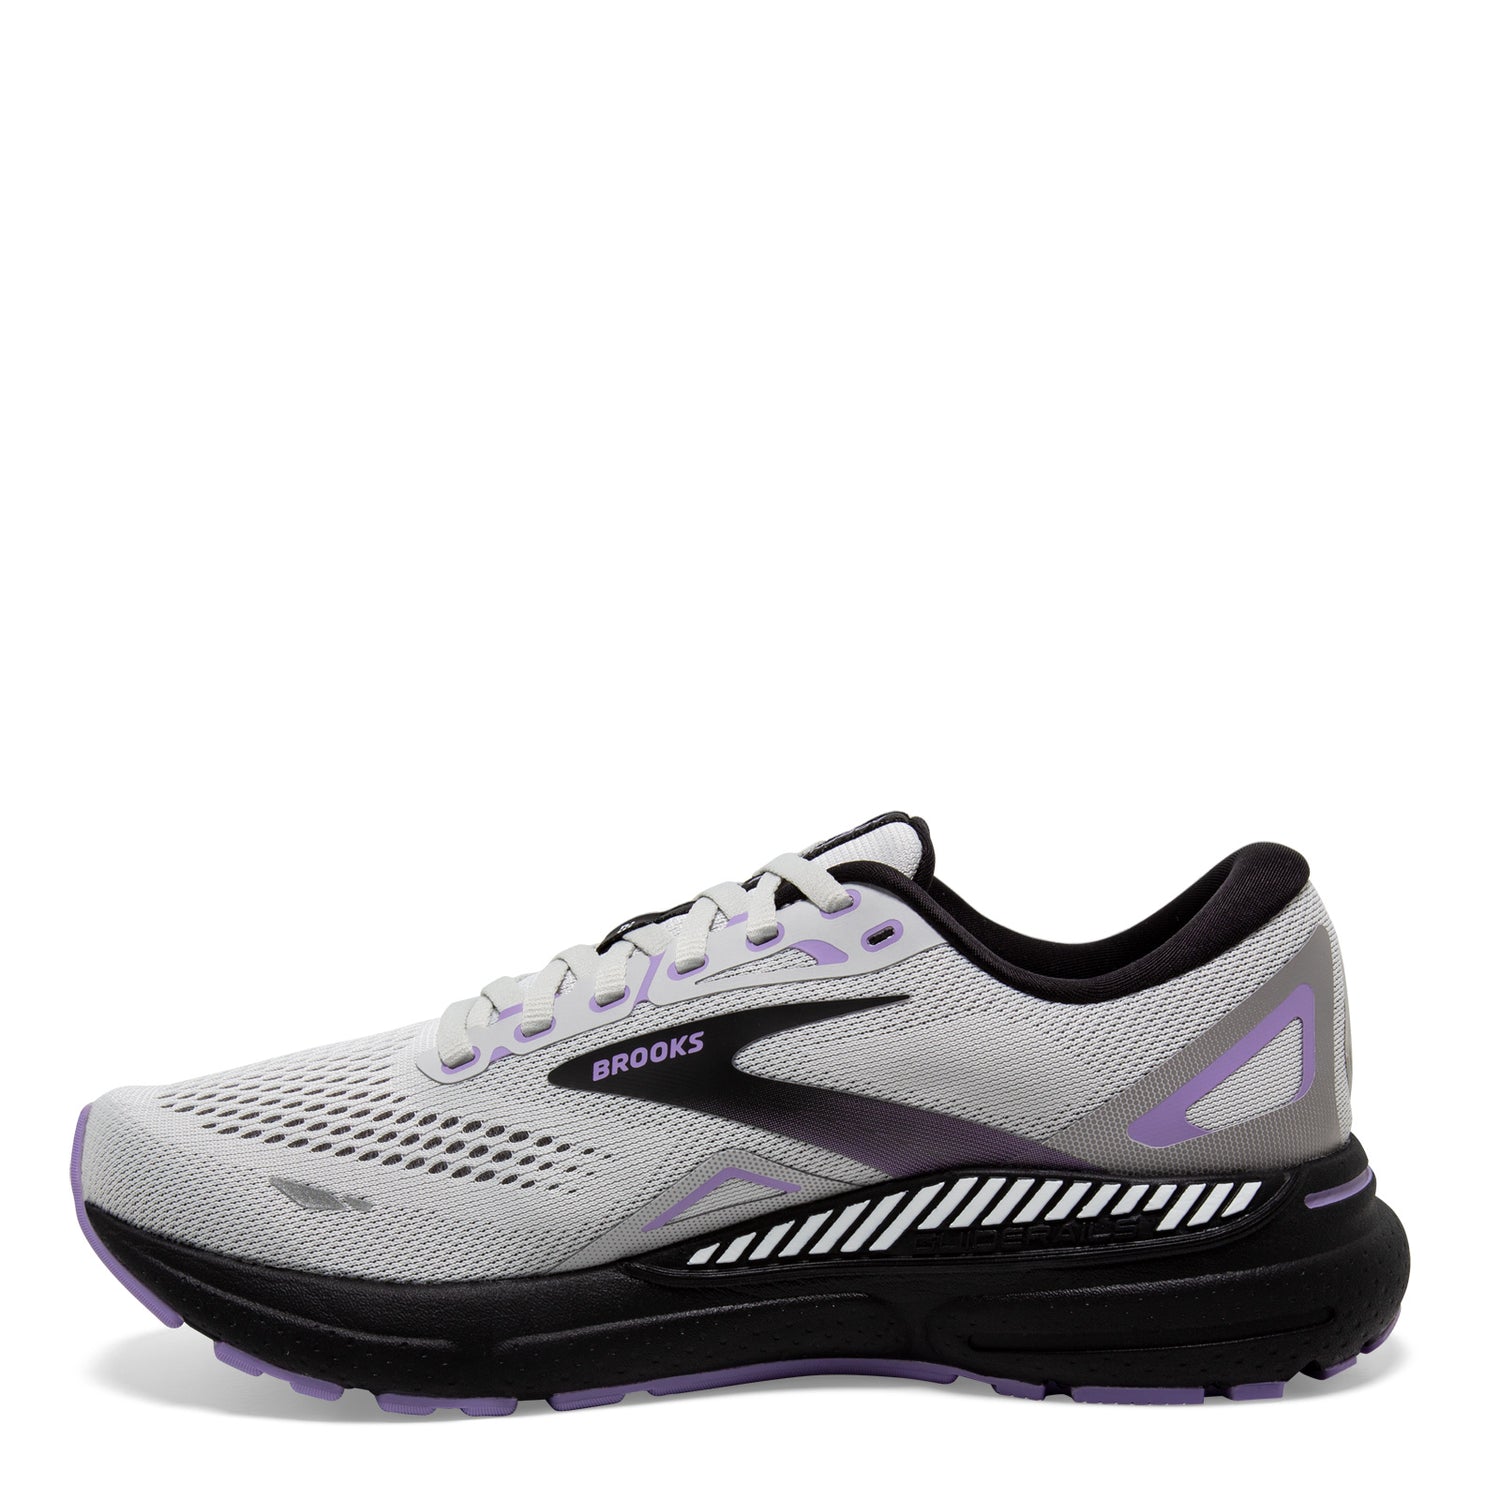 Peltz Shoes  Women's Brooks Adrenaline GTS 23 Running Shoe – Wide Width Grey/Purple/Black 120381 1D 039